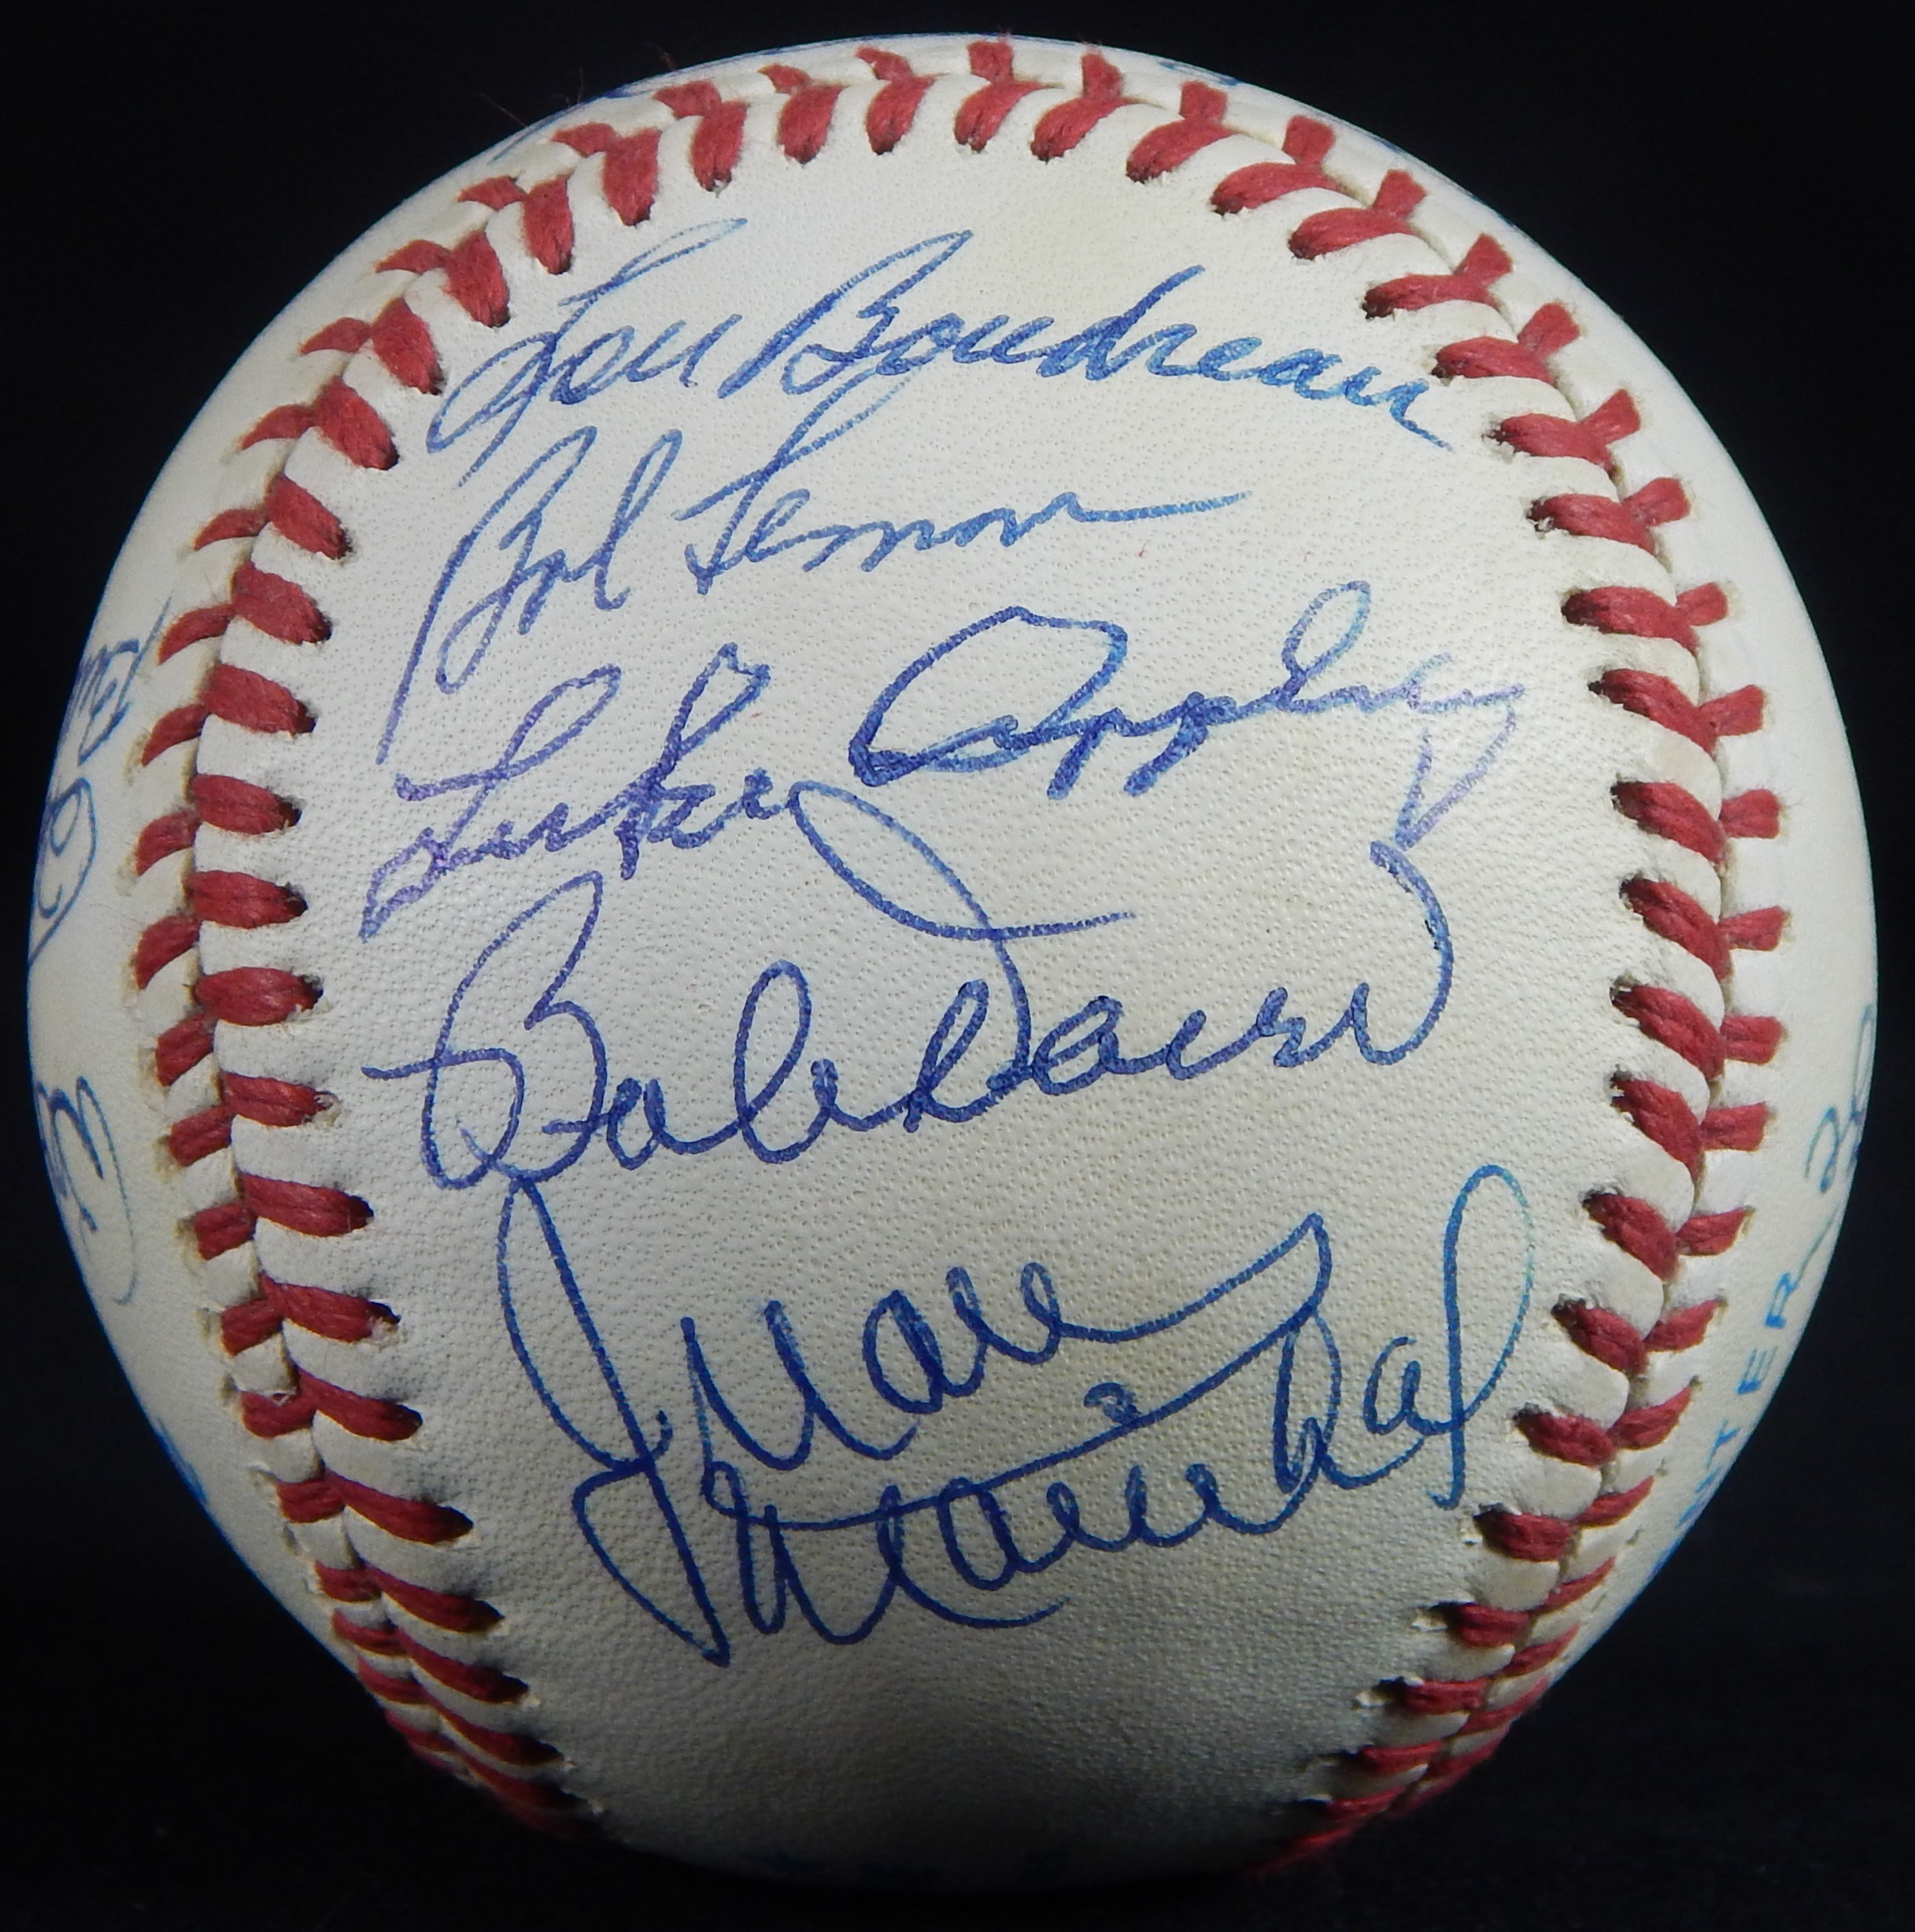 Baseball Autographs - Hall Of Famers Signed baseball (16 signatures)